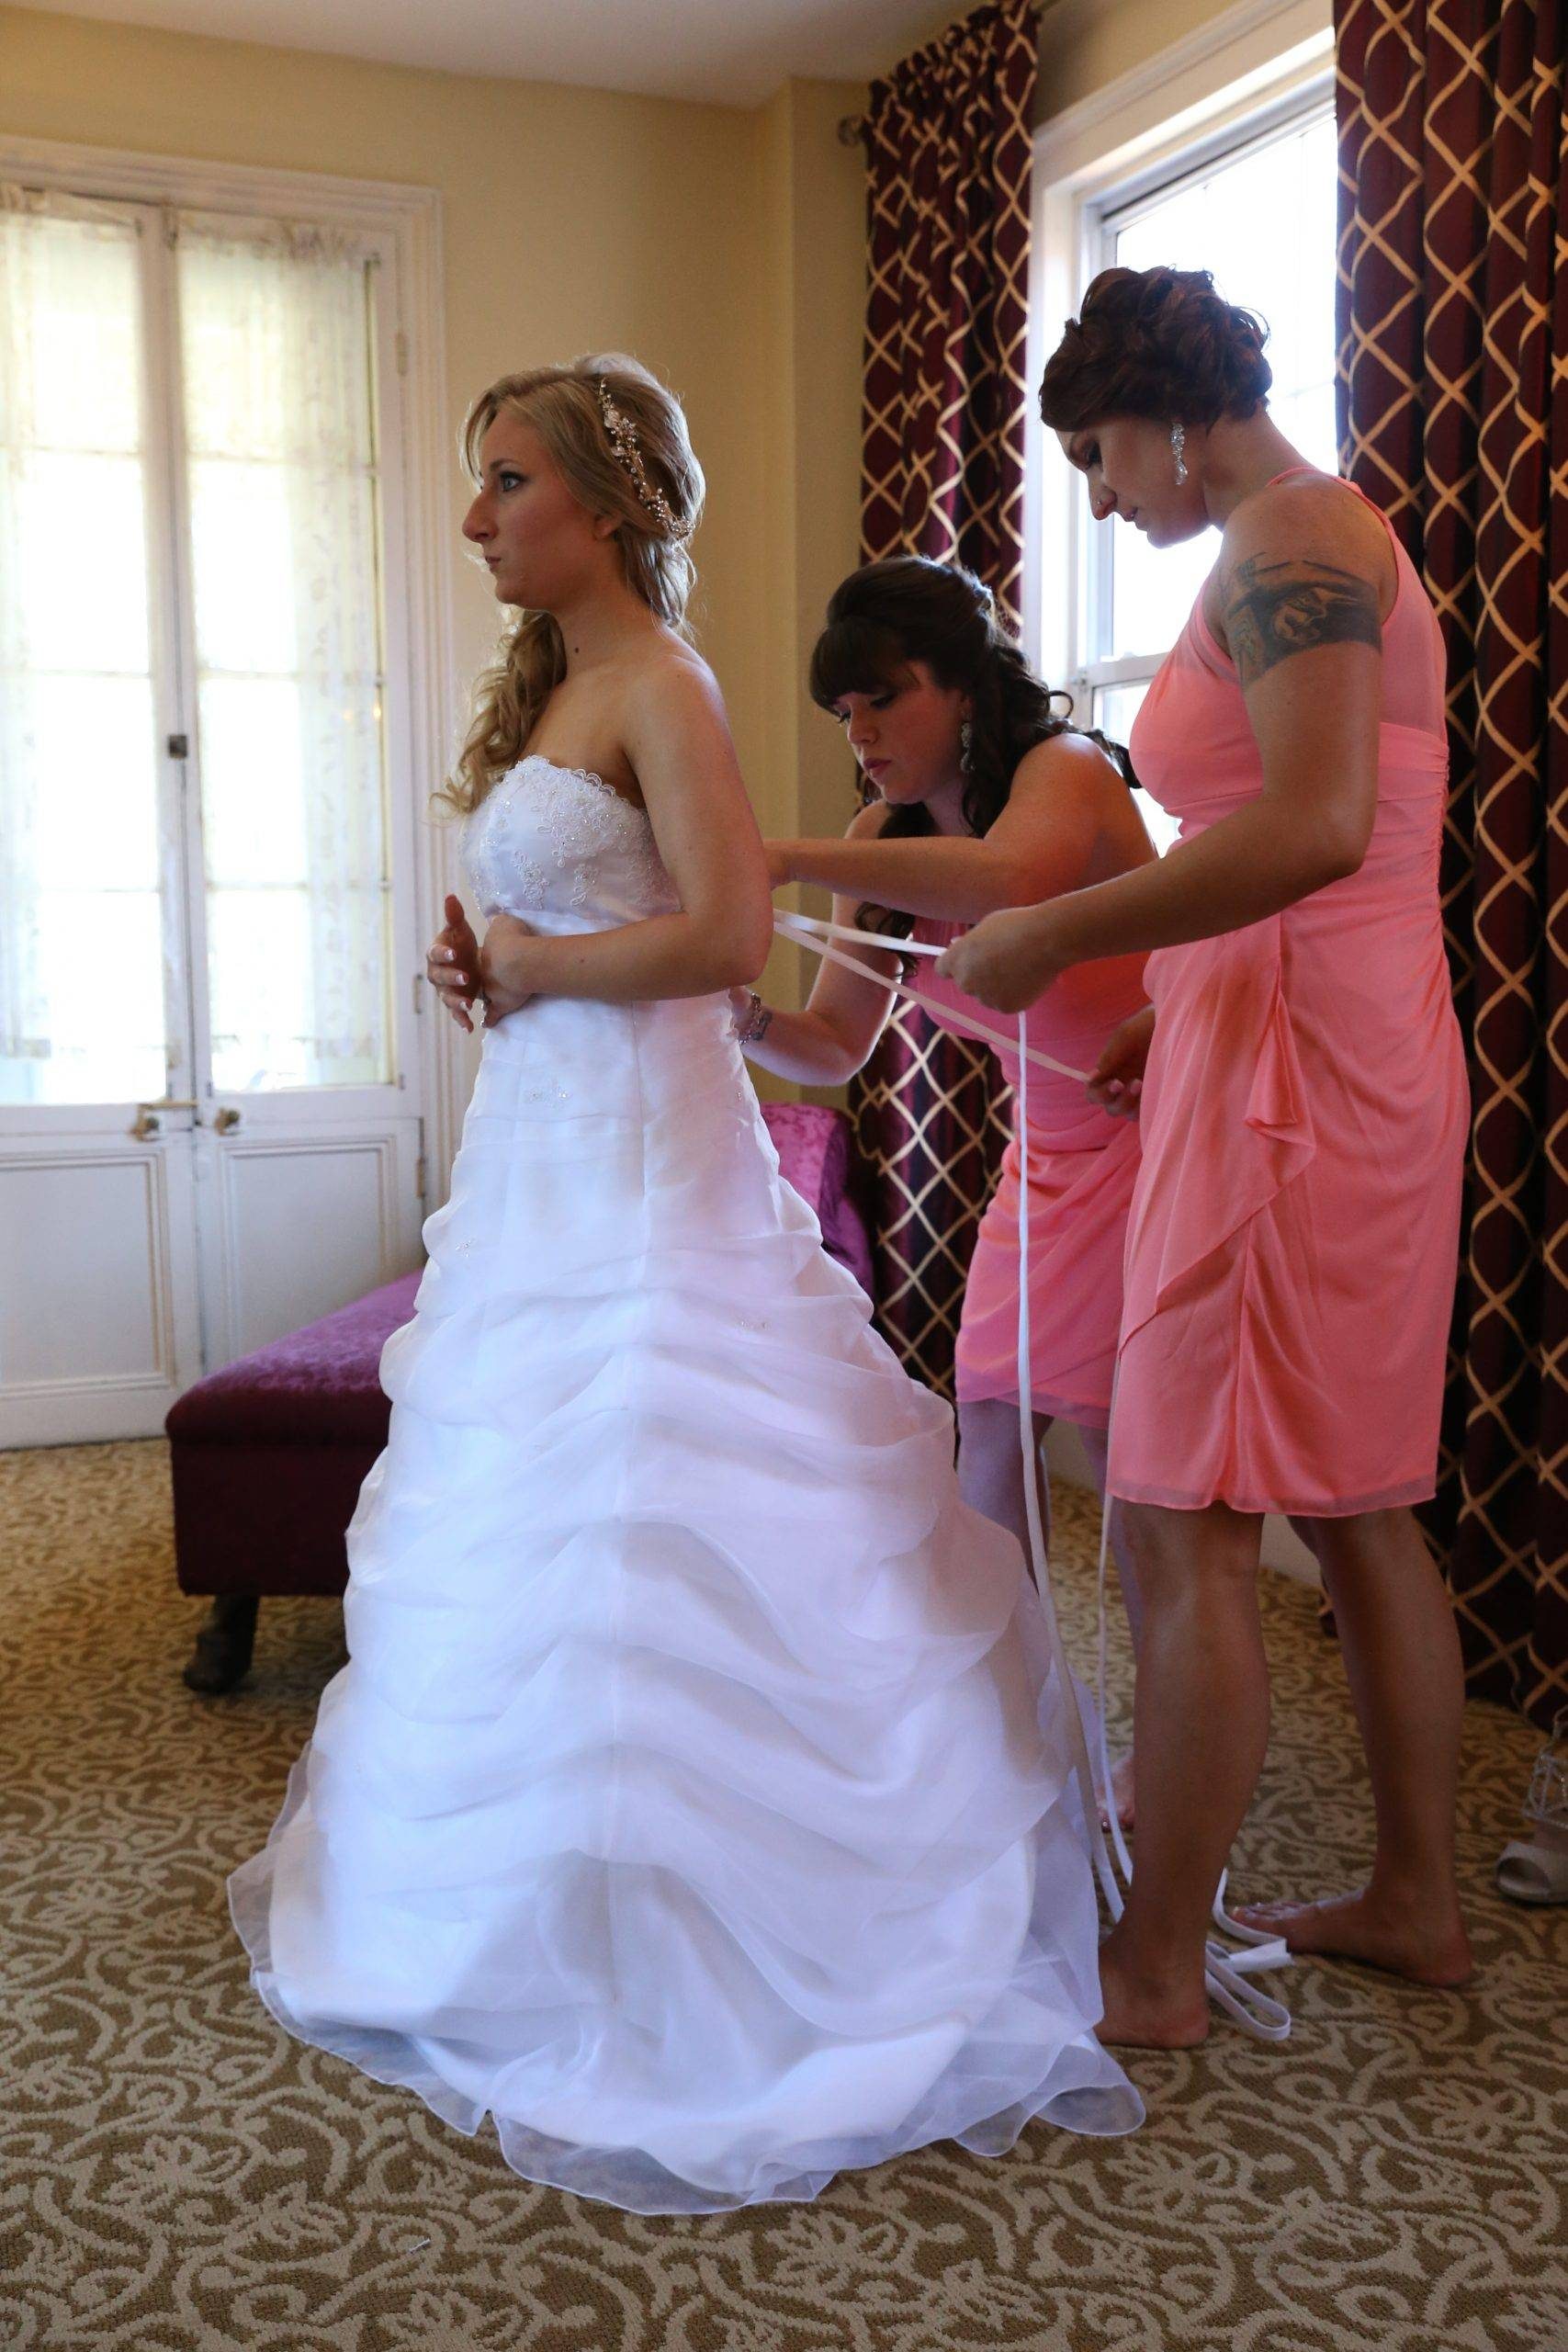 David’s Country Inn bride getting dressed